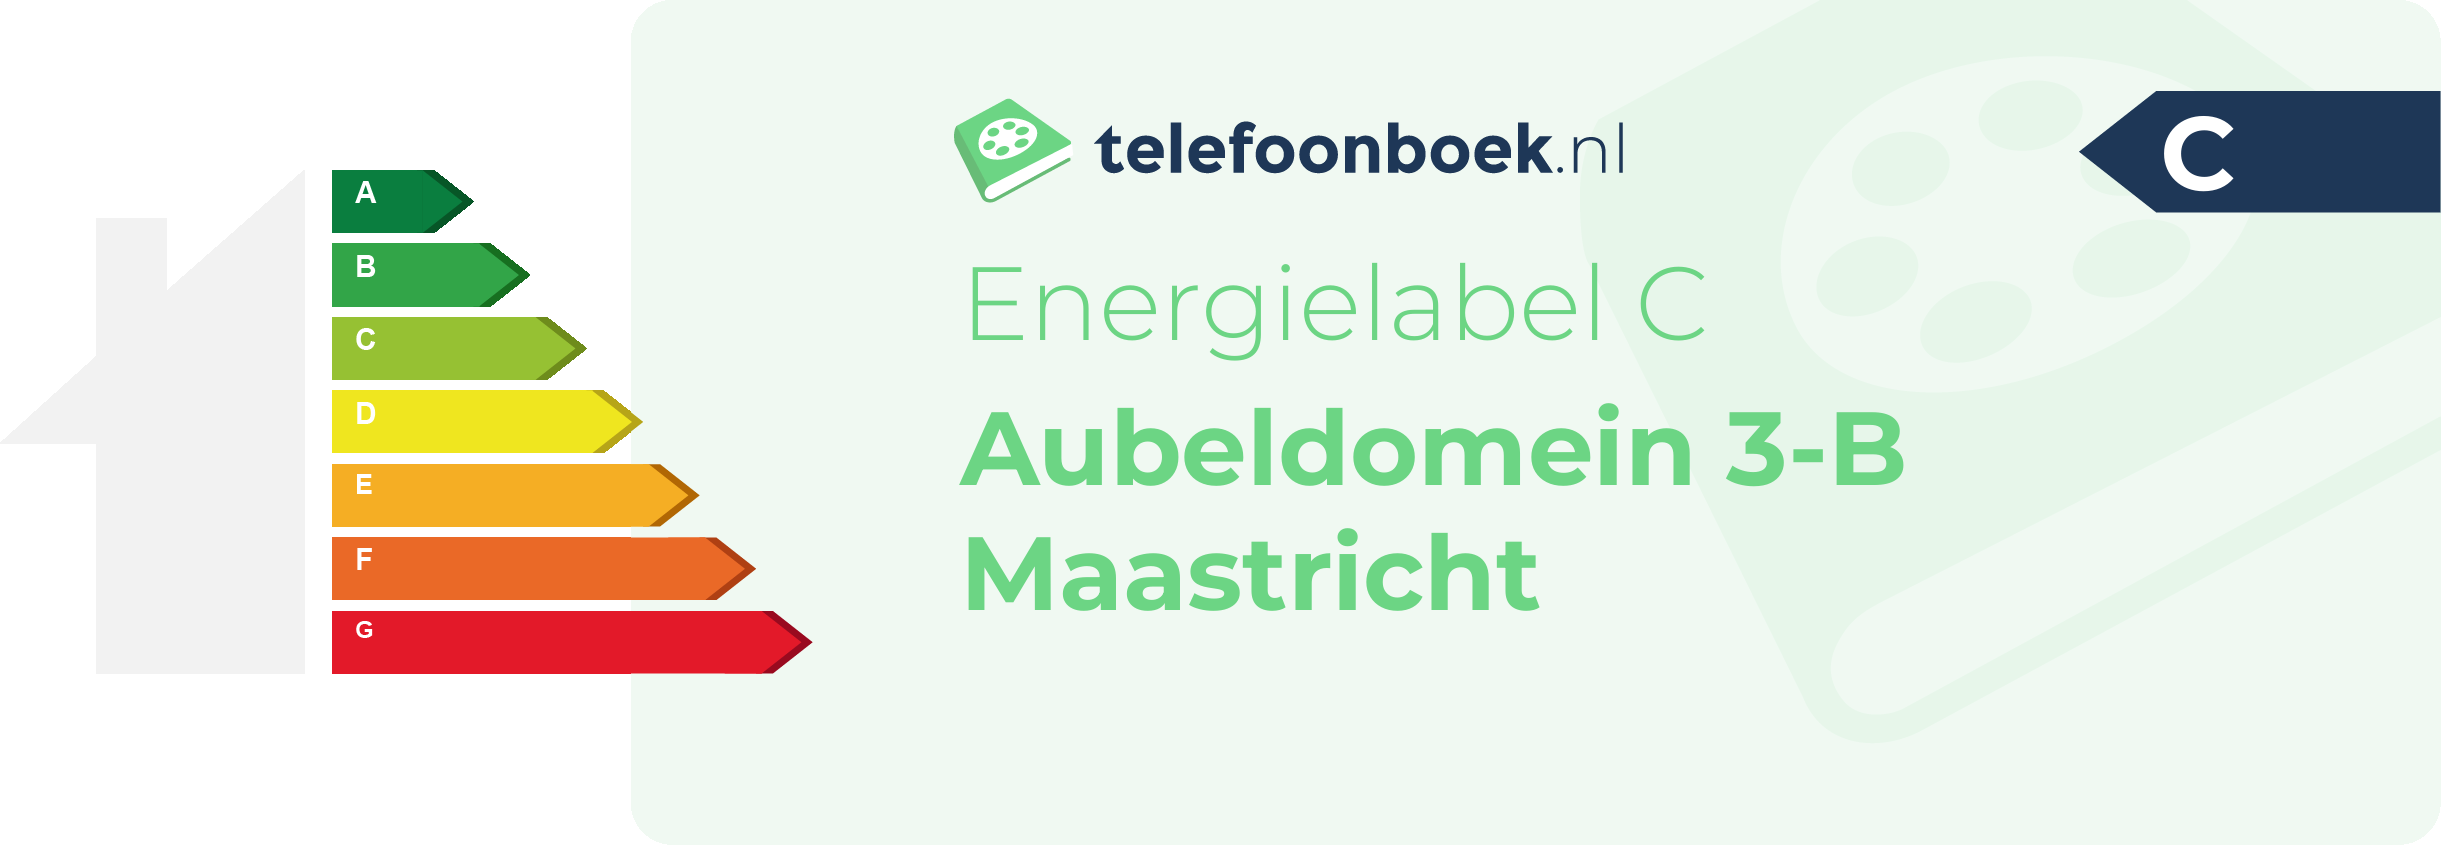 Energielabel Aubeldomein 3-B Maastricht